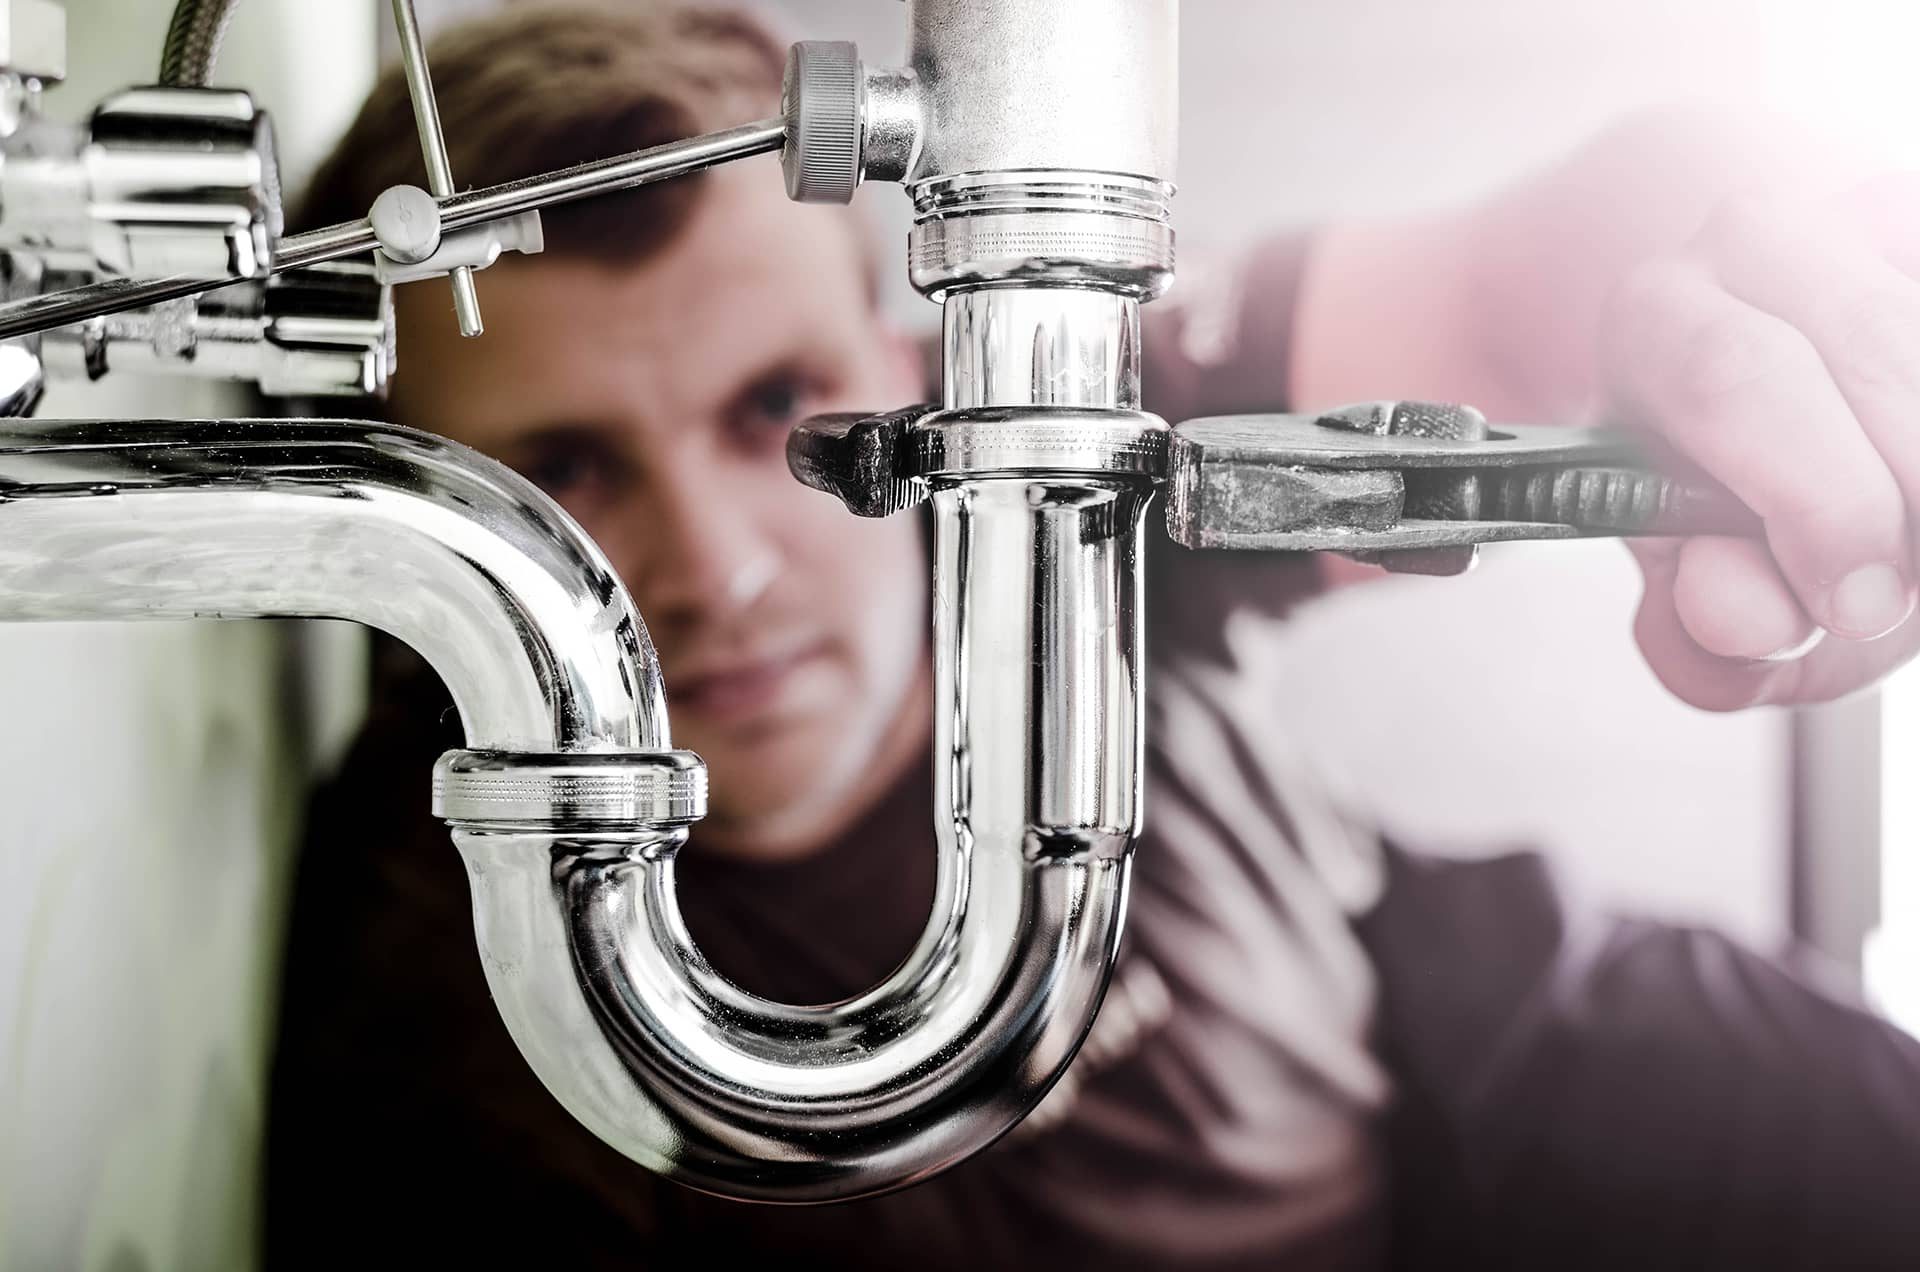 Plumbing Services - sink repair